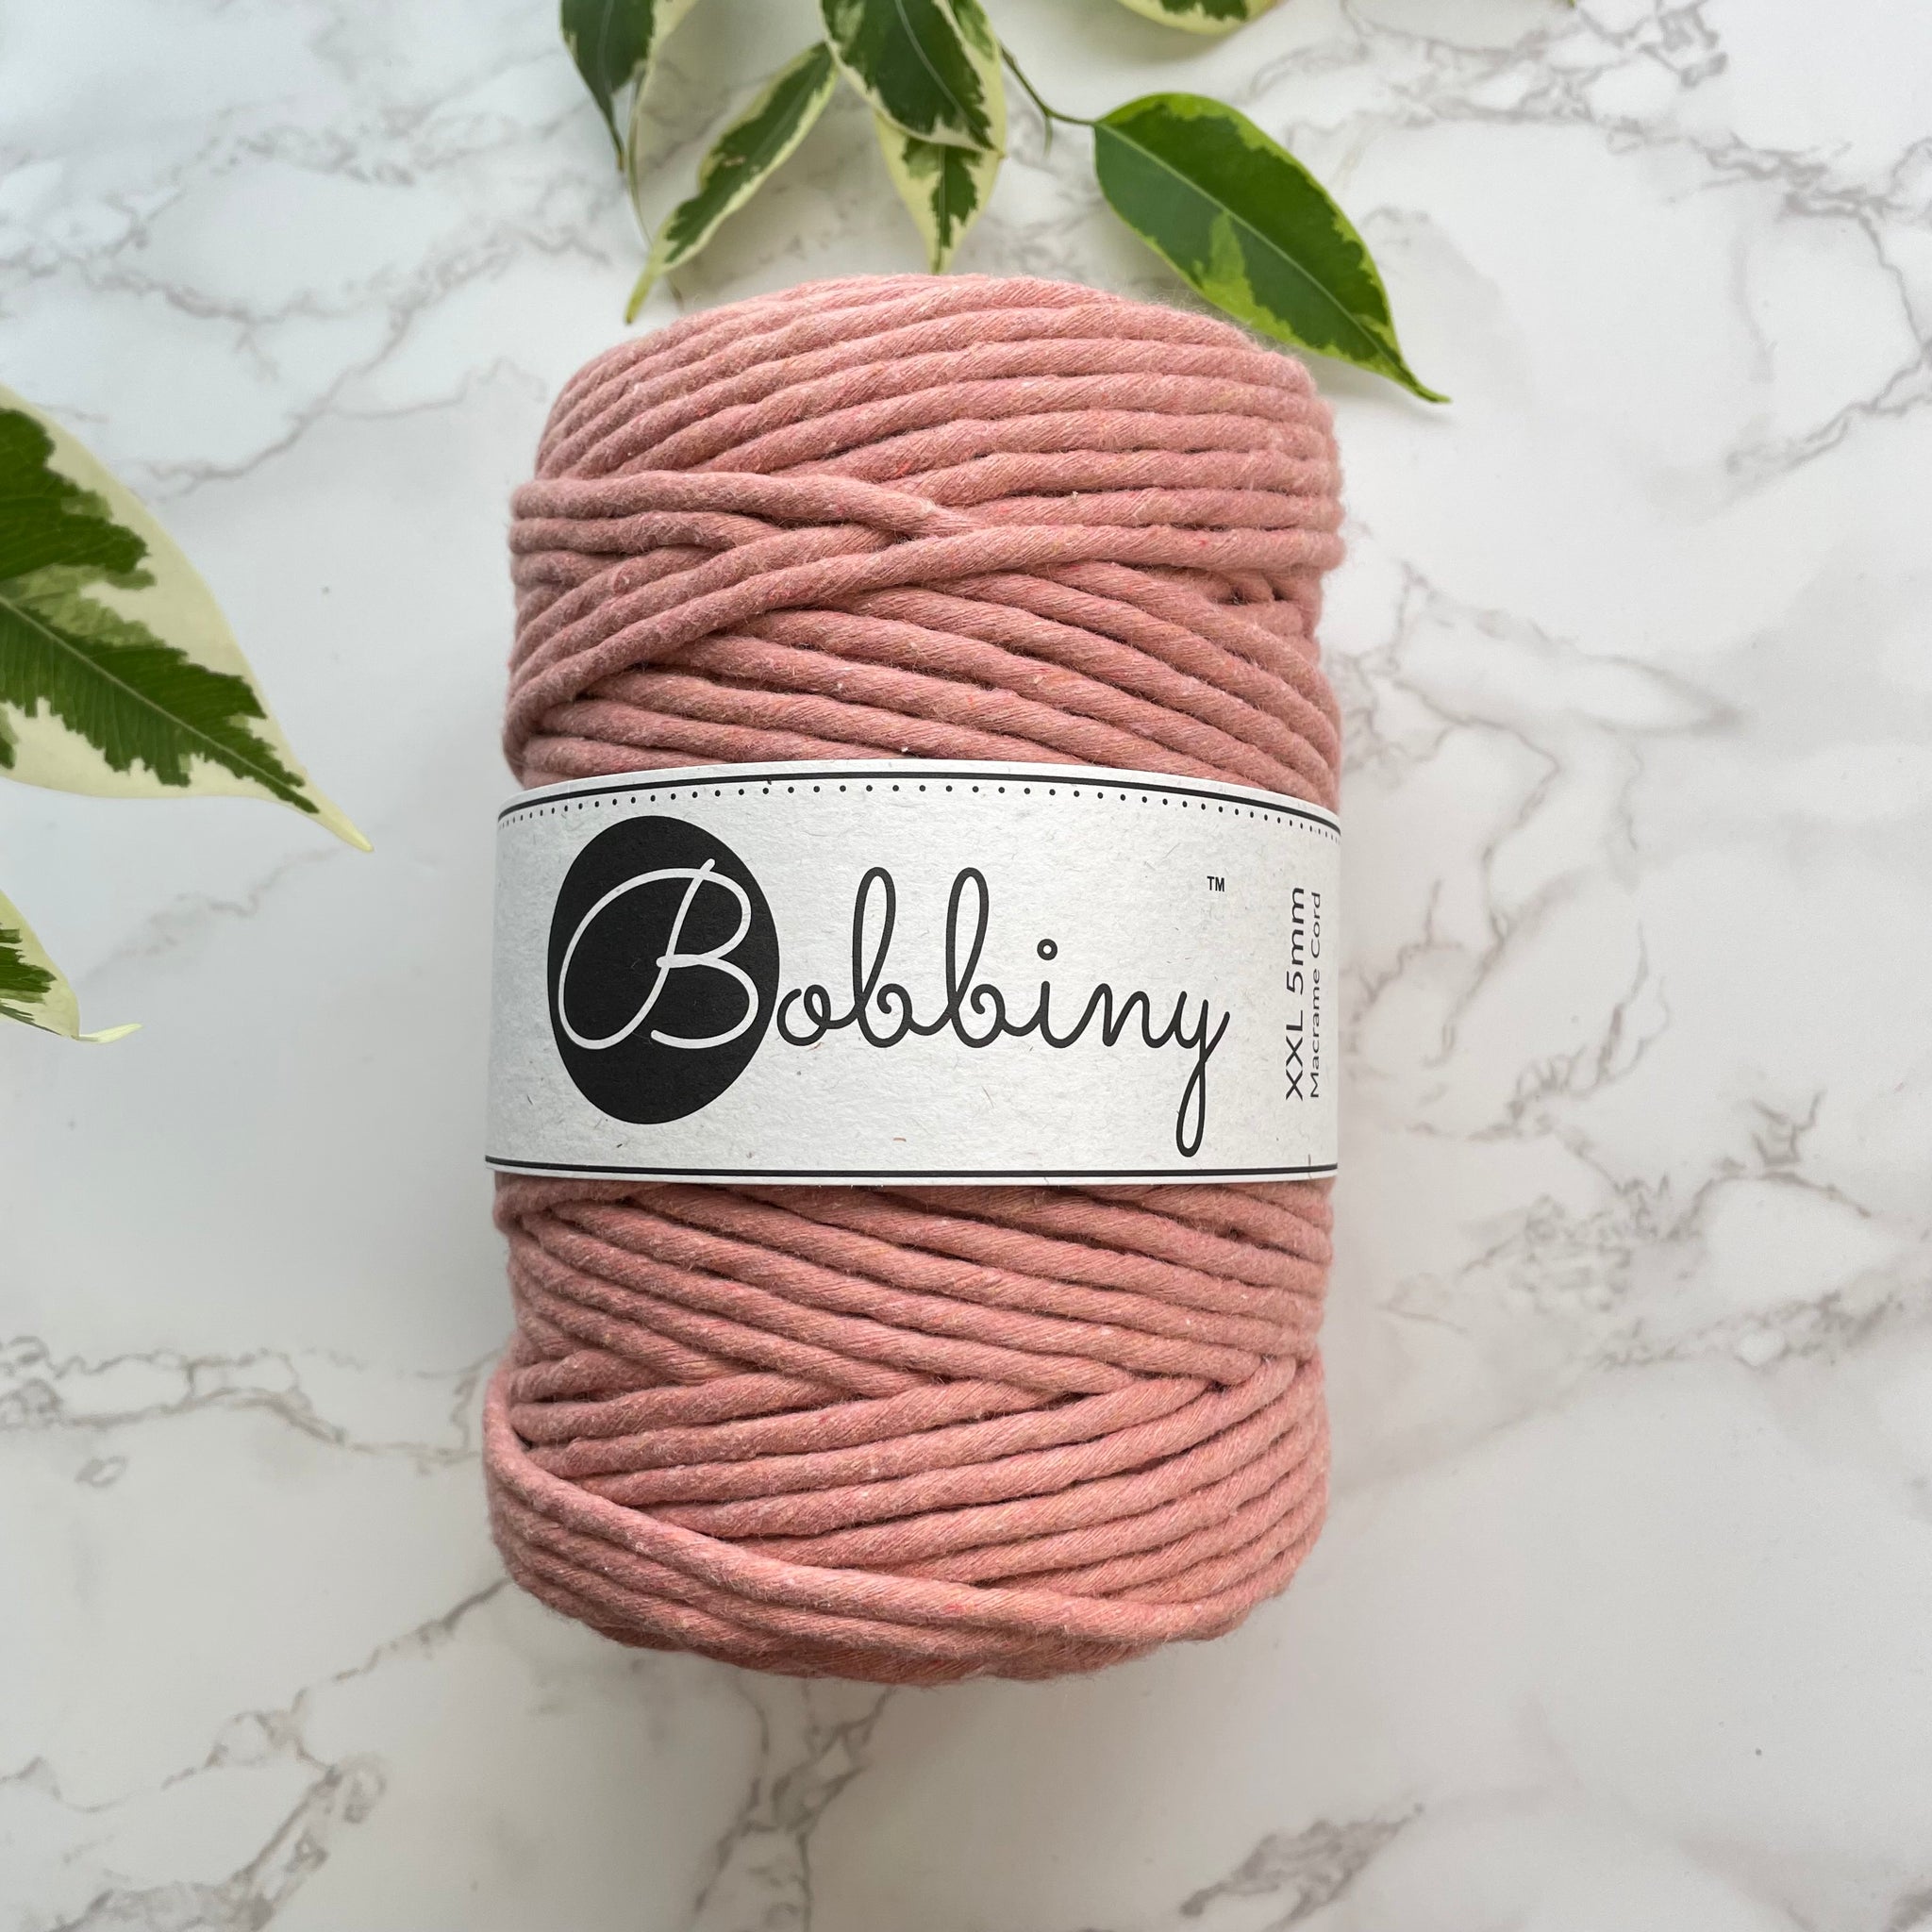 Bobbiny 5mm ‘Blush' Cotton String - 100m